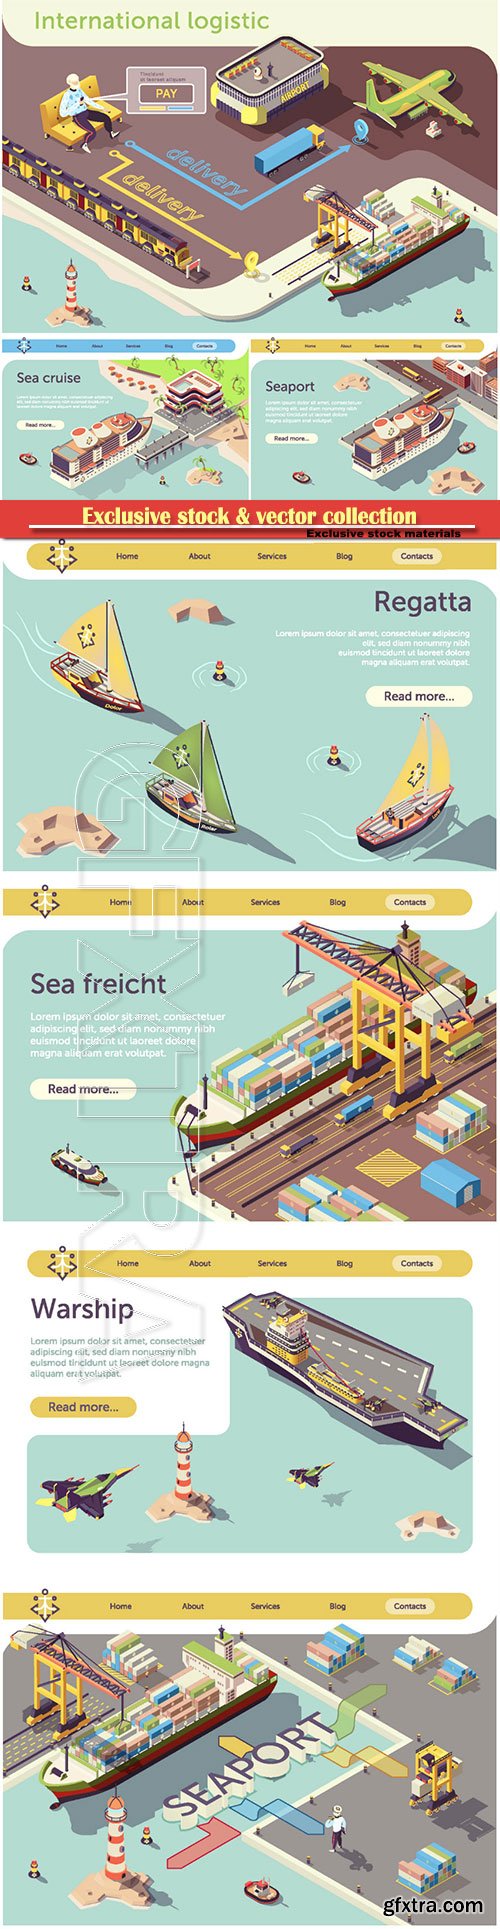 Online International Logistic Infographic Banner